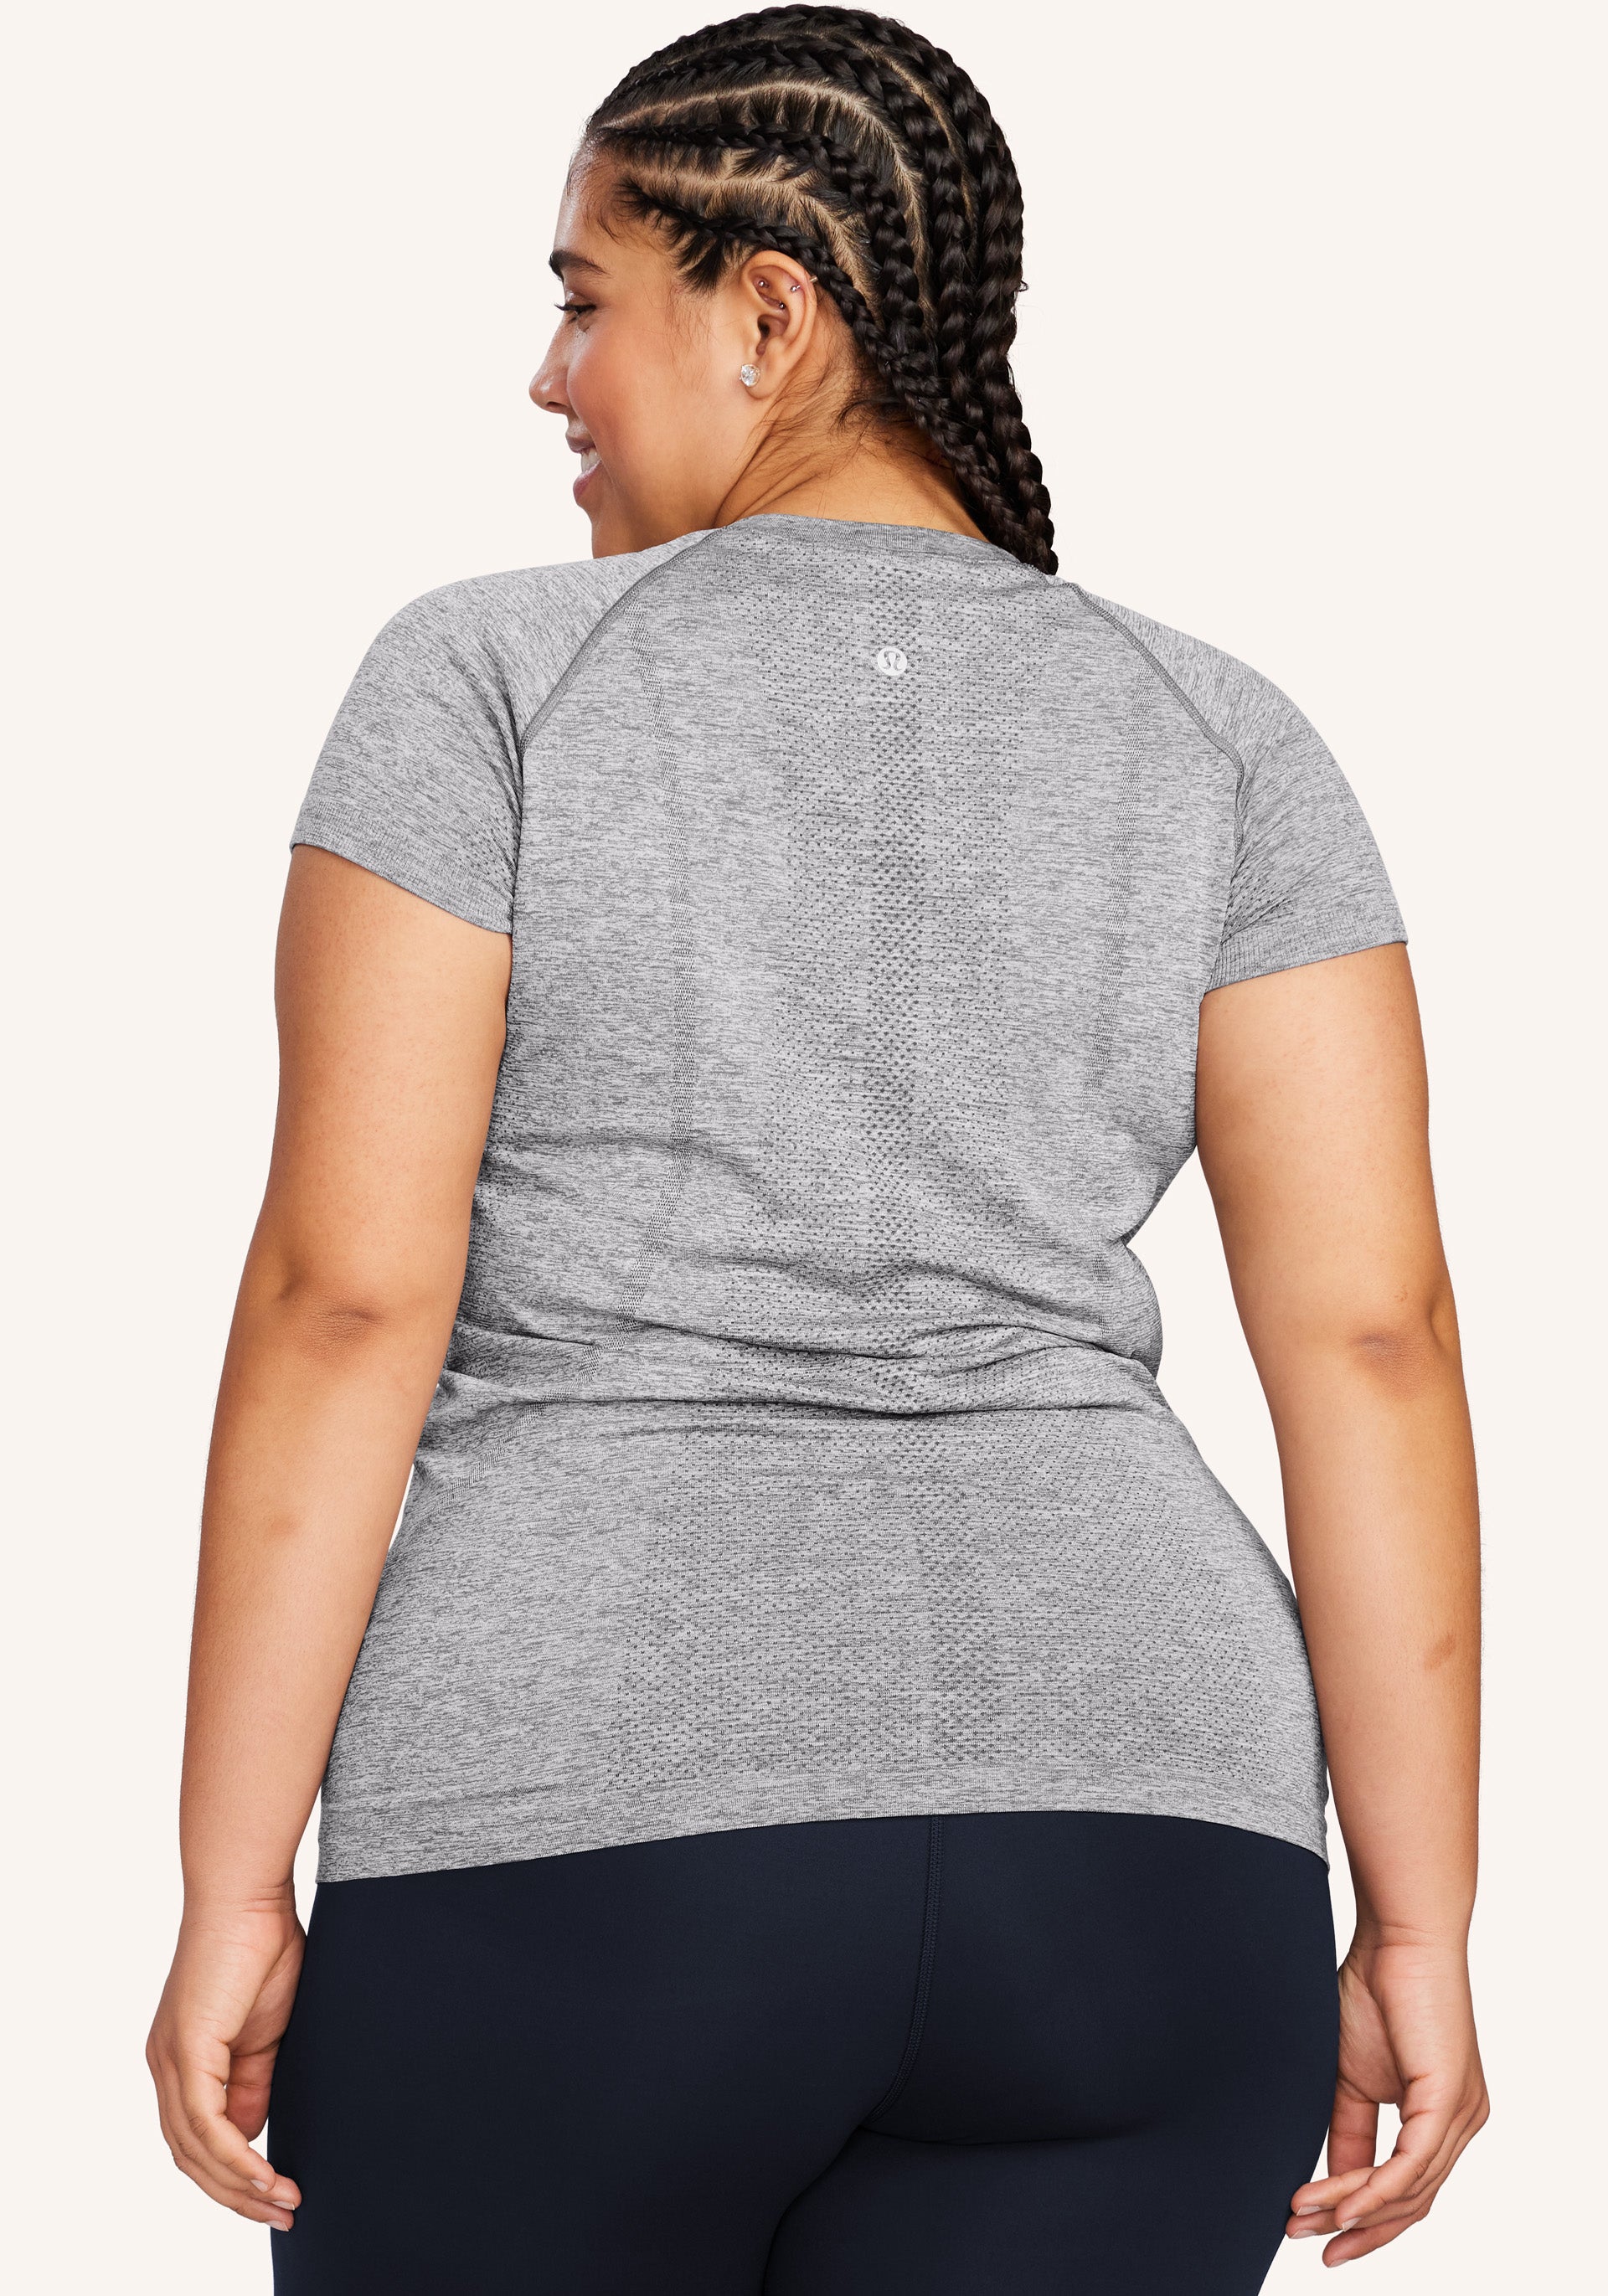 Swiftly Tech Short-Sleeve Shirt 2.0